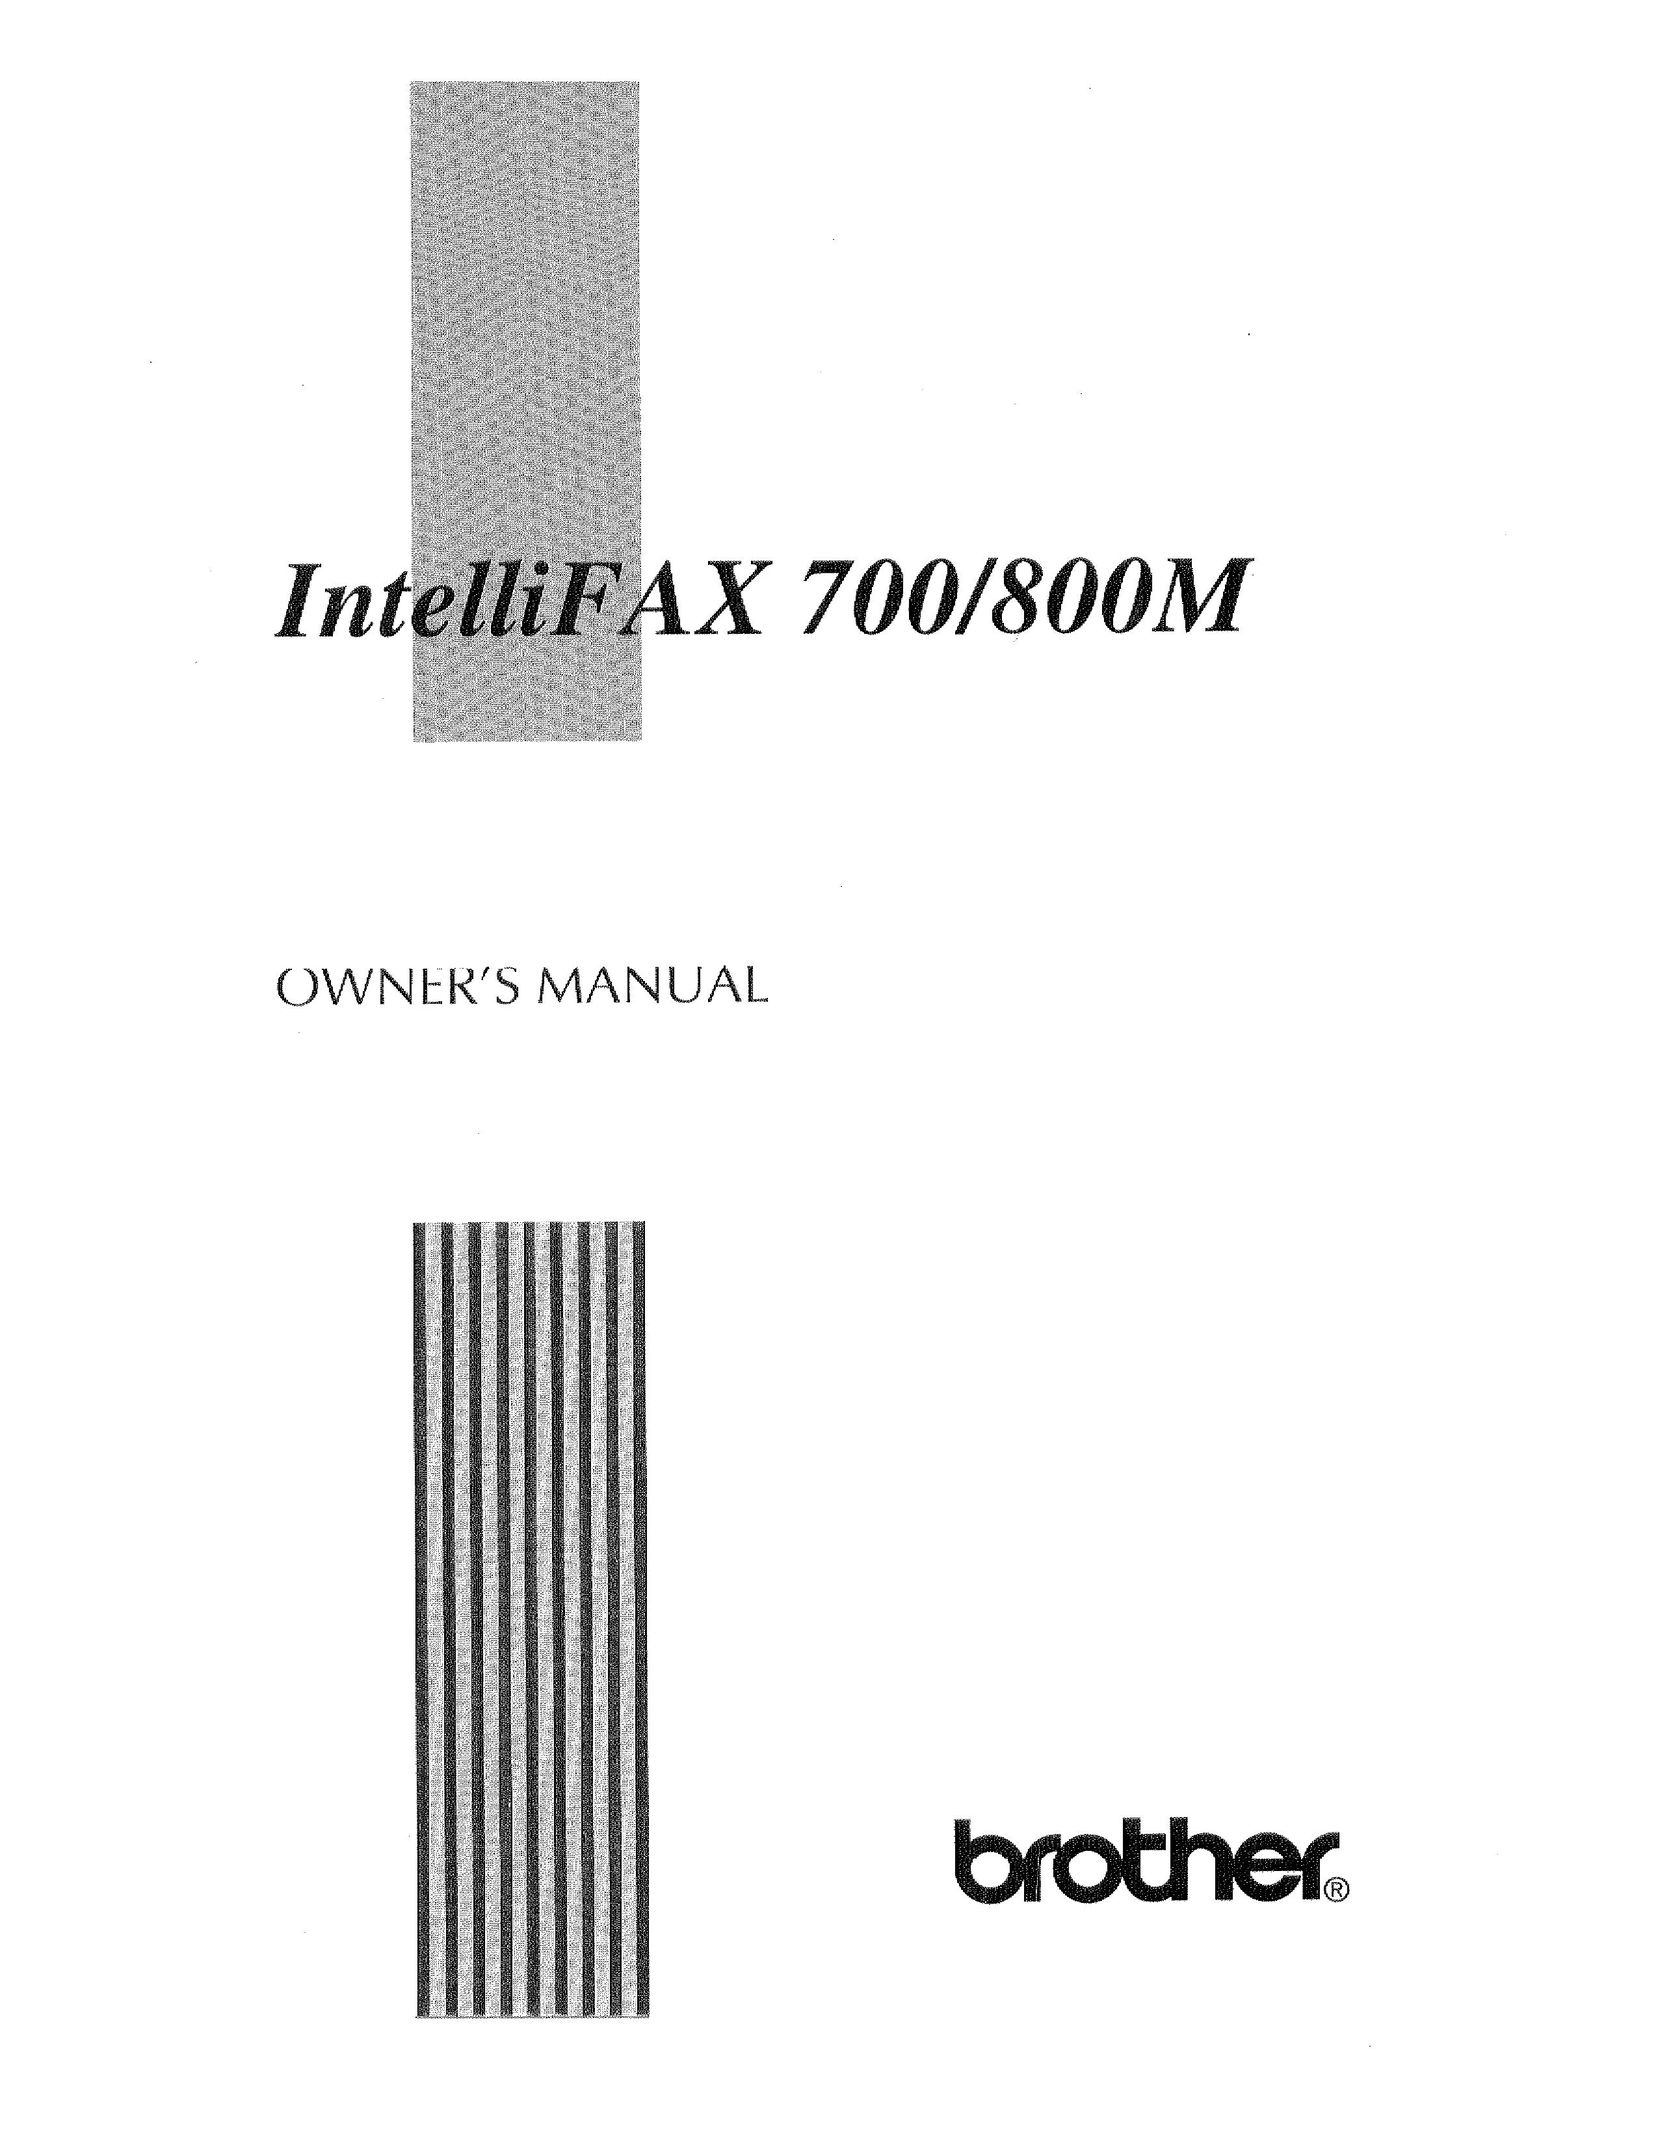 Brother 700/800M Fax Machine User Manual